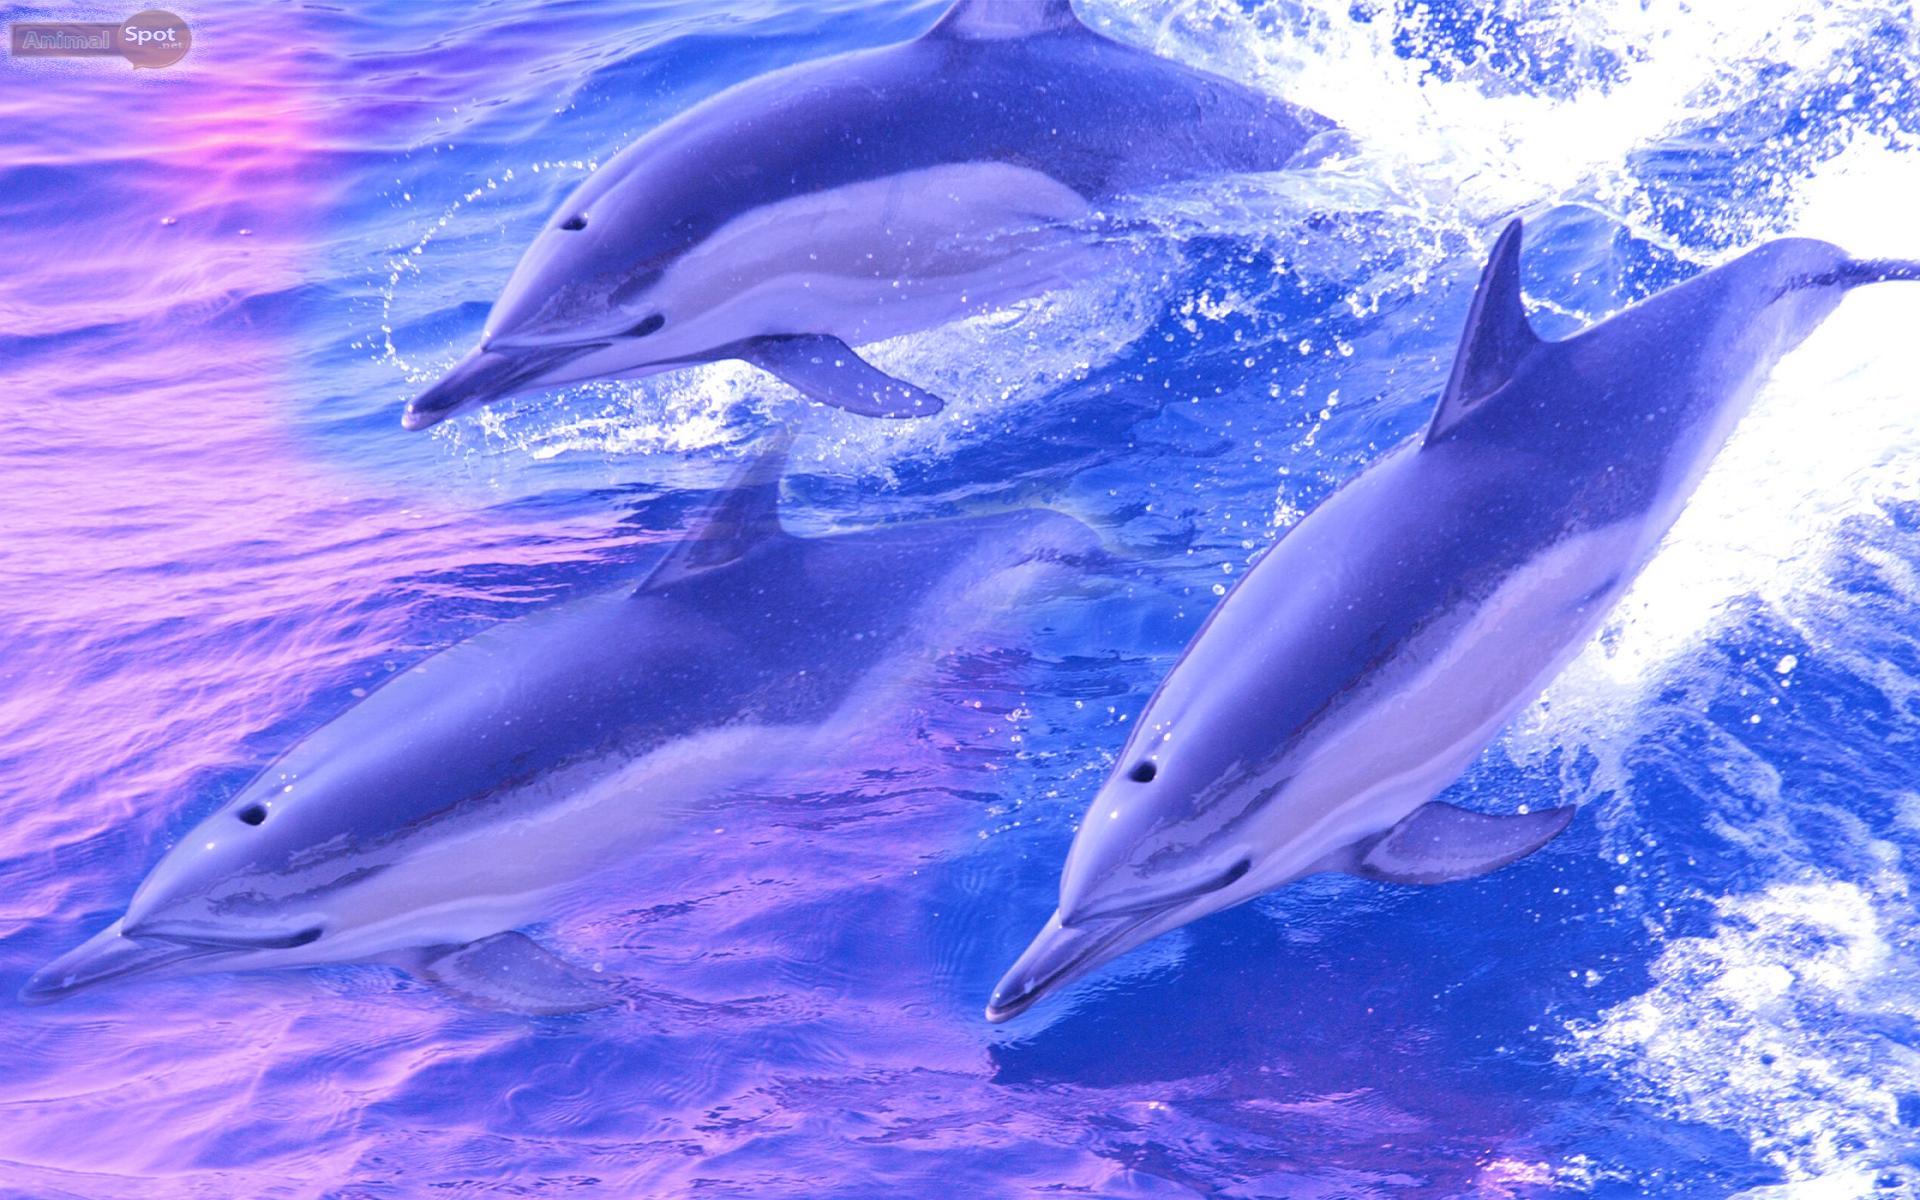 Fondos de delfines # 736DNG7 (1600x1200 px) - 4USkY